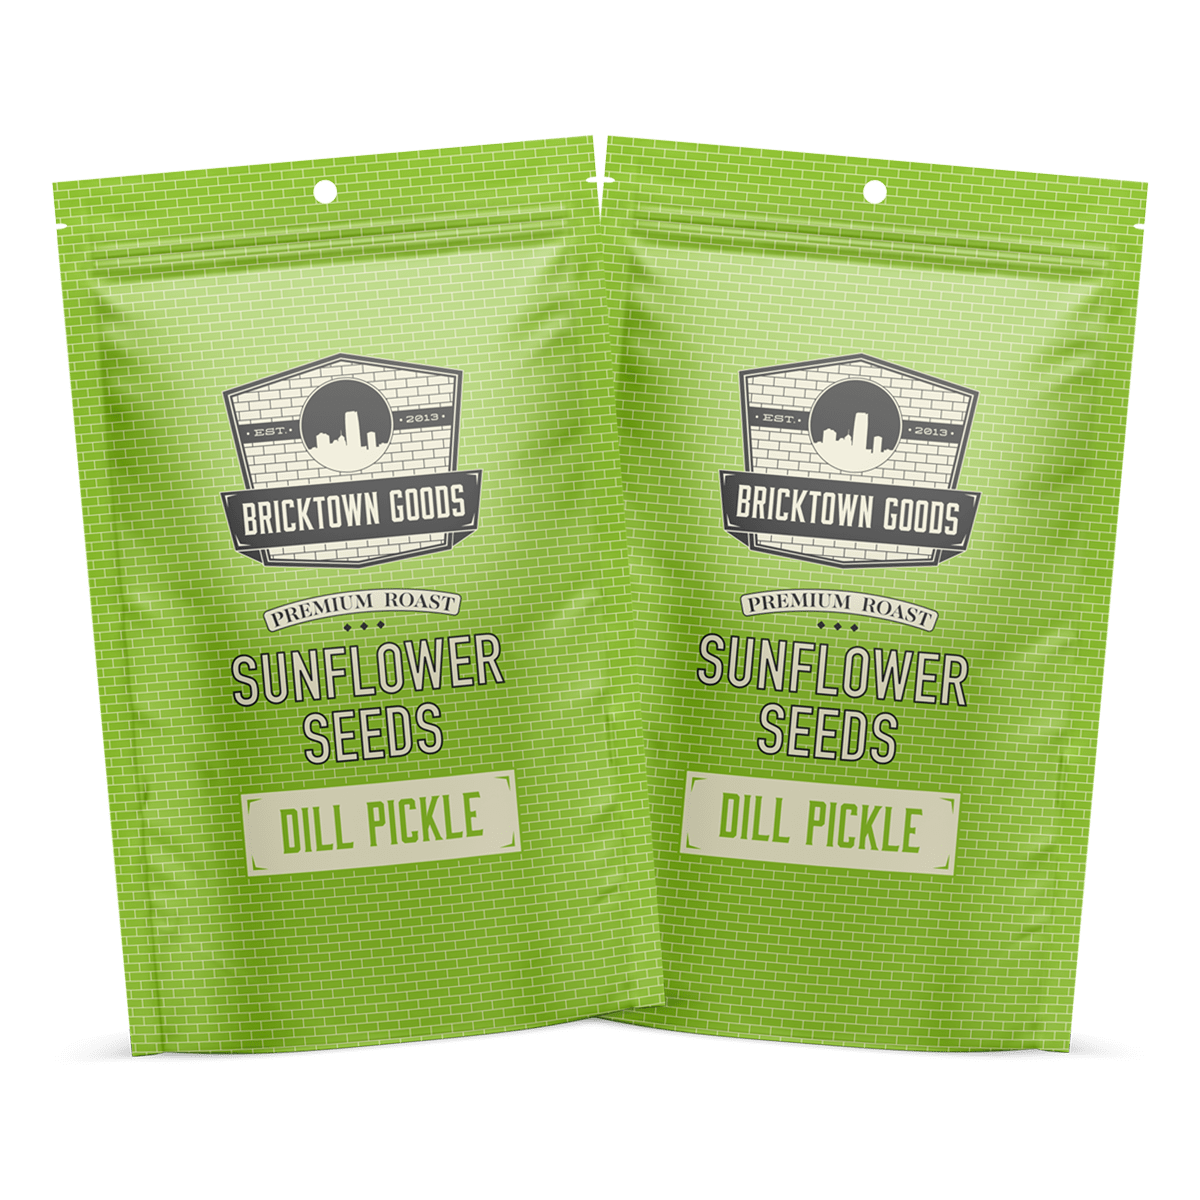 Premium Roast Sunflower Seeds - Dill Pickle by Bricktown Roasters